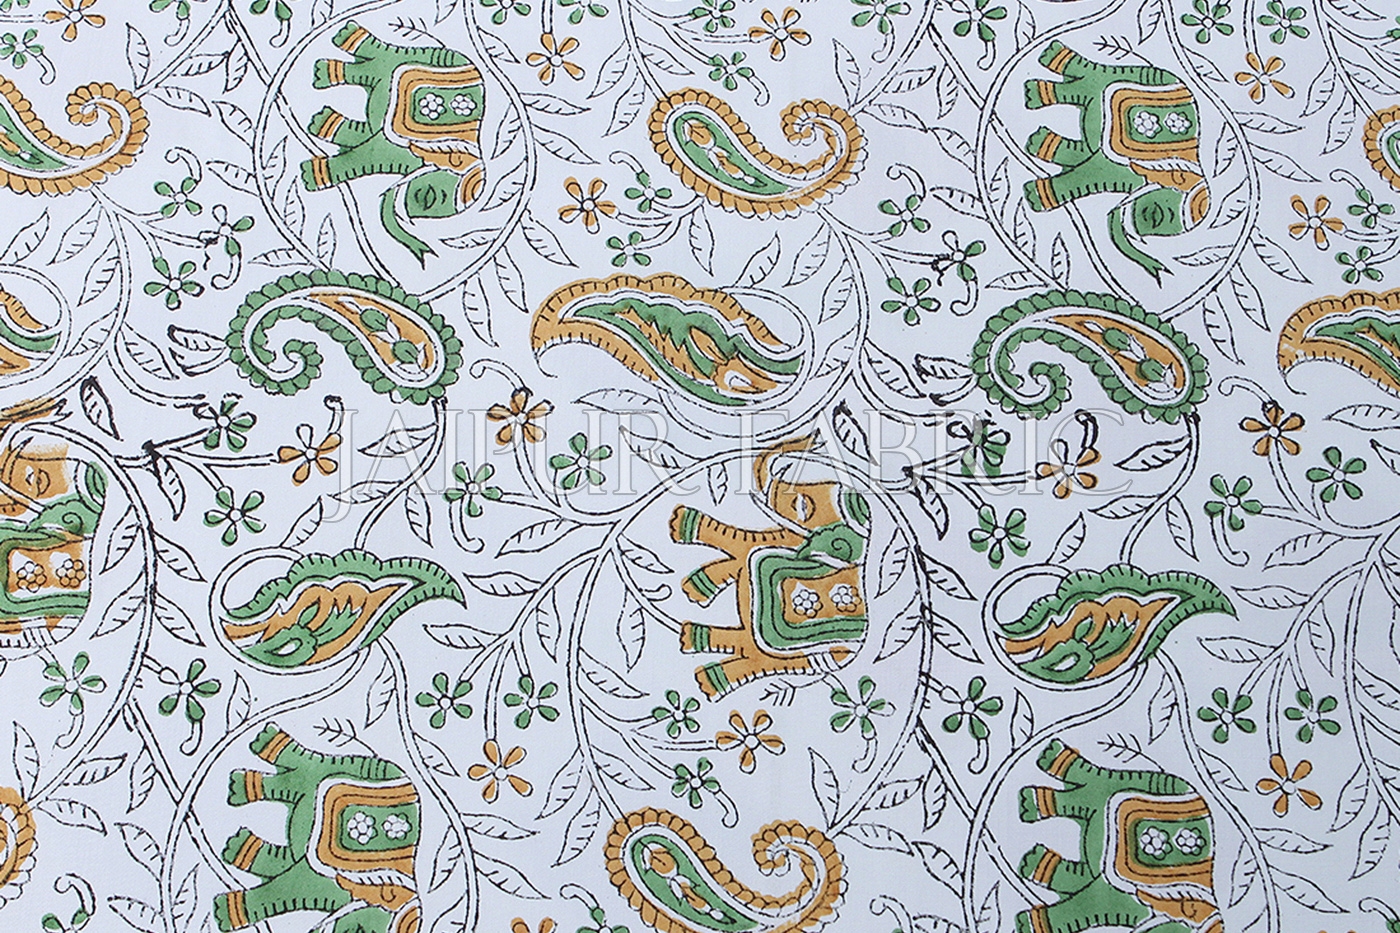 White Base With Green Elephant Brown Mango pattern Print Single Cotton Bed sheet